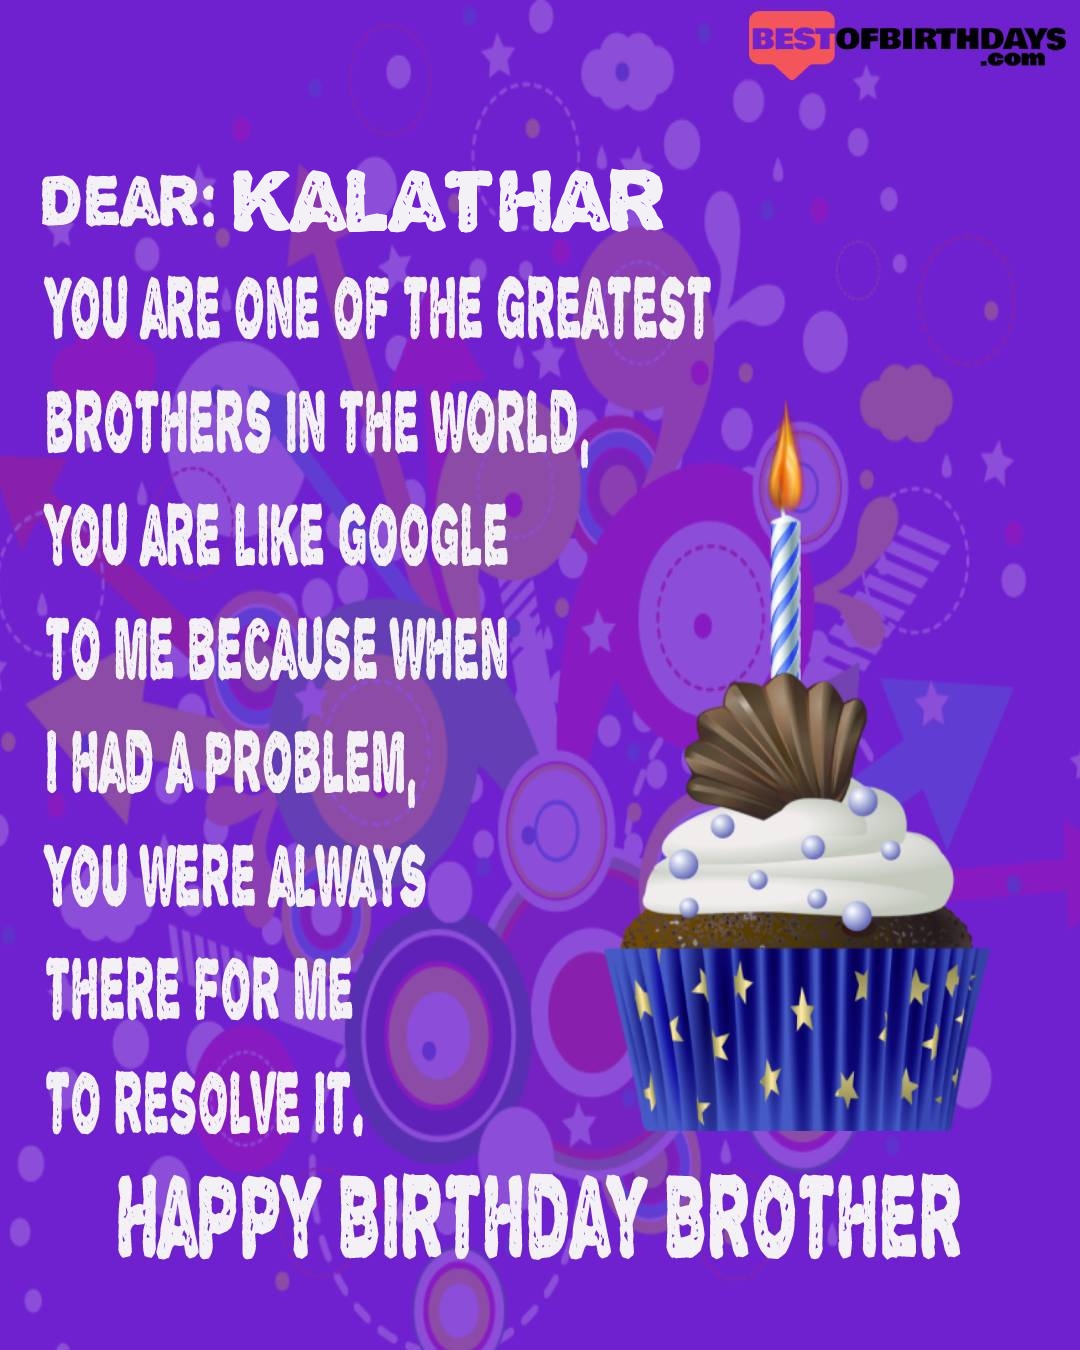 Happy birthday kalathar bhai brother bro